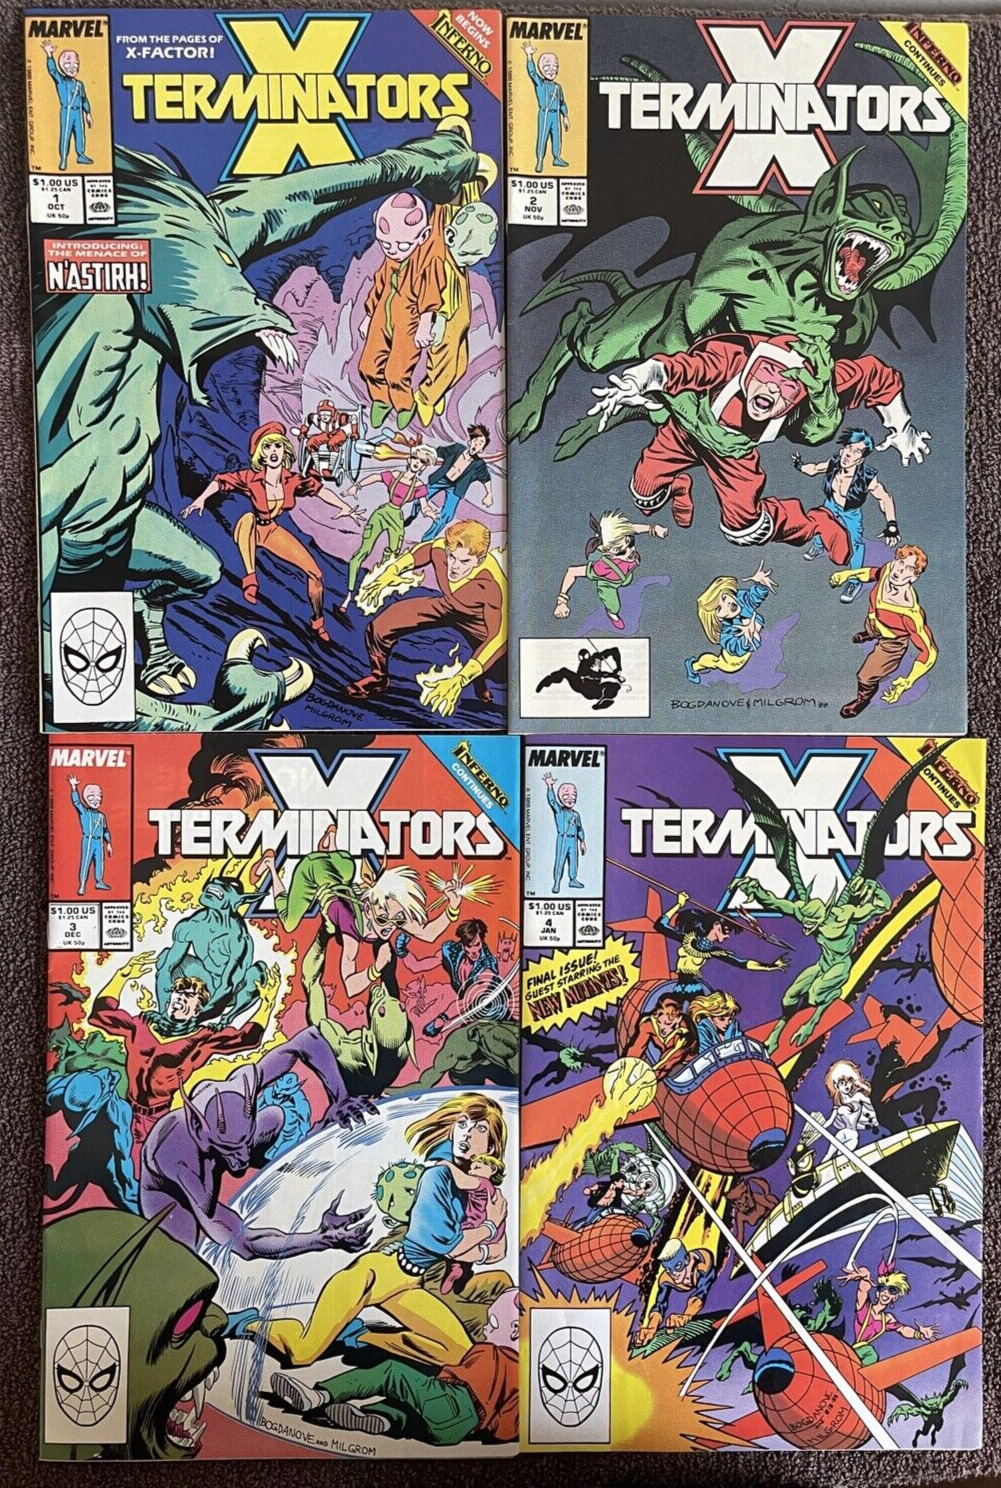 X-TERMINATORS #1-4 (Marvel, 1988) Complete Series Lot of 4 Books